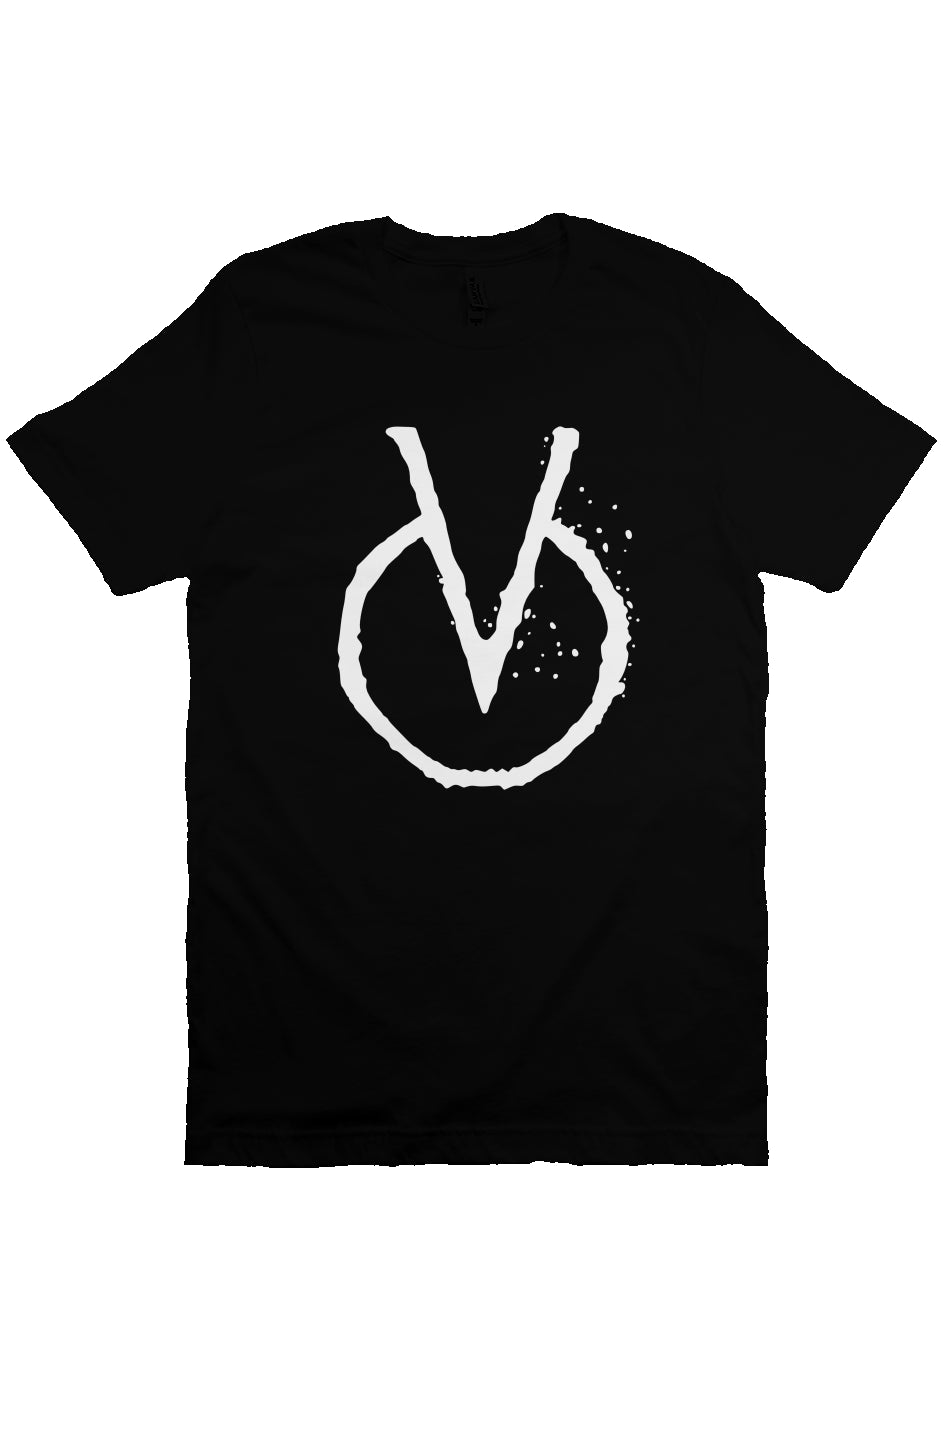 The Velvicks Greatest Hits T-Shirt - White on Black